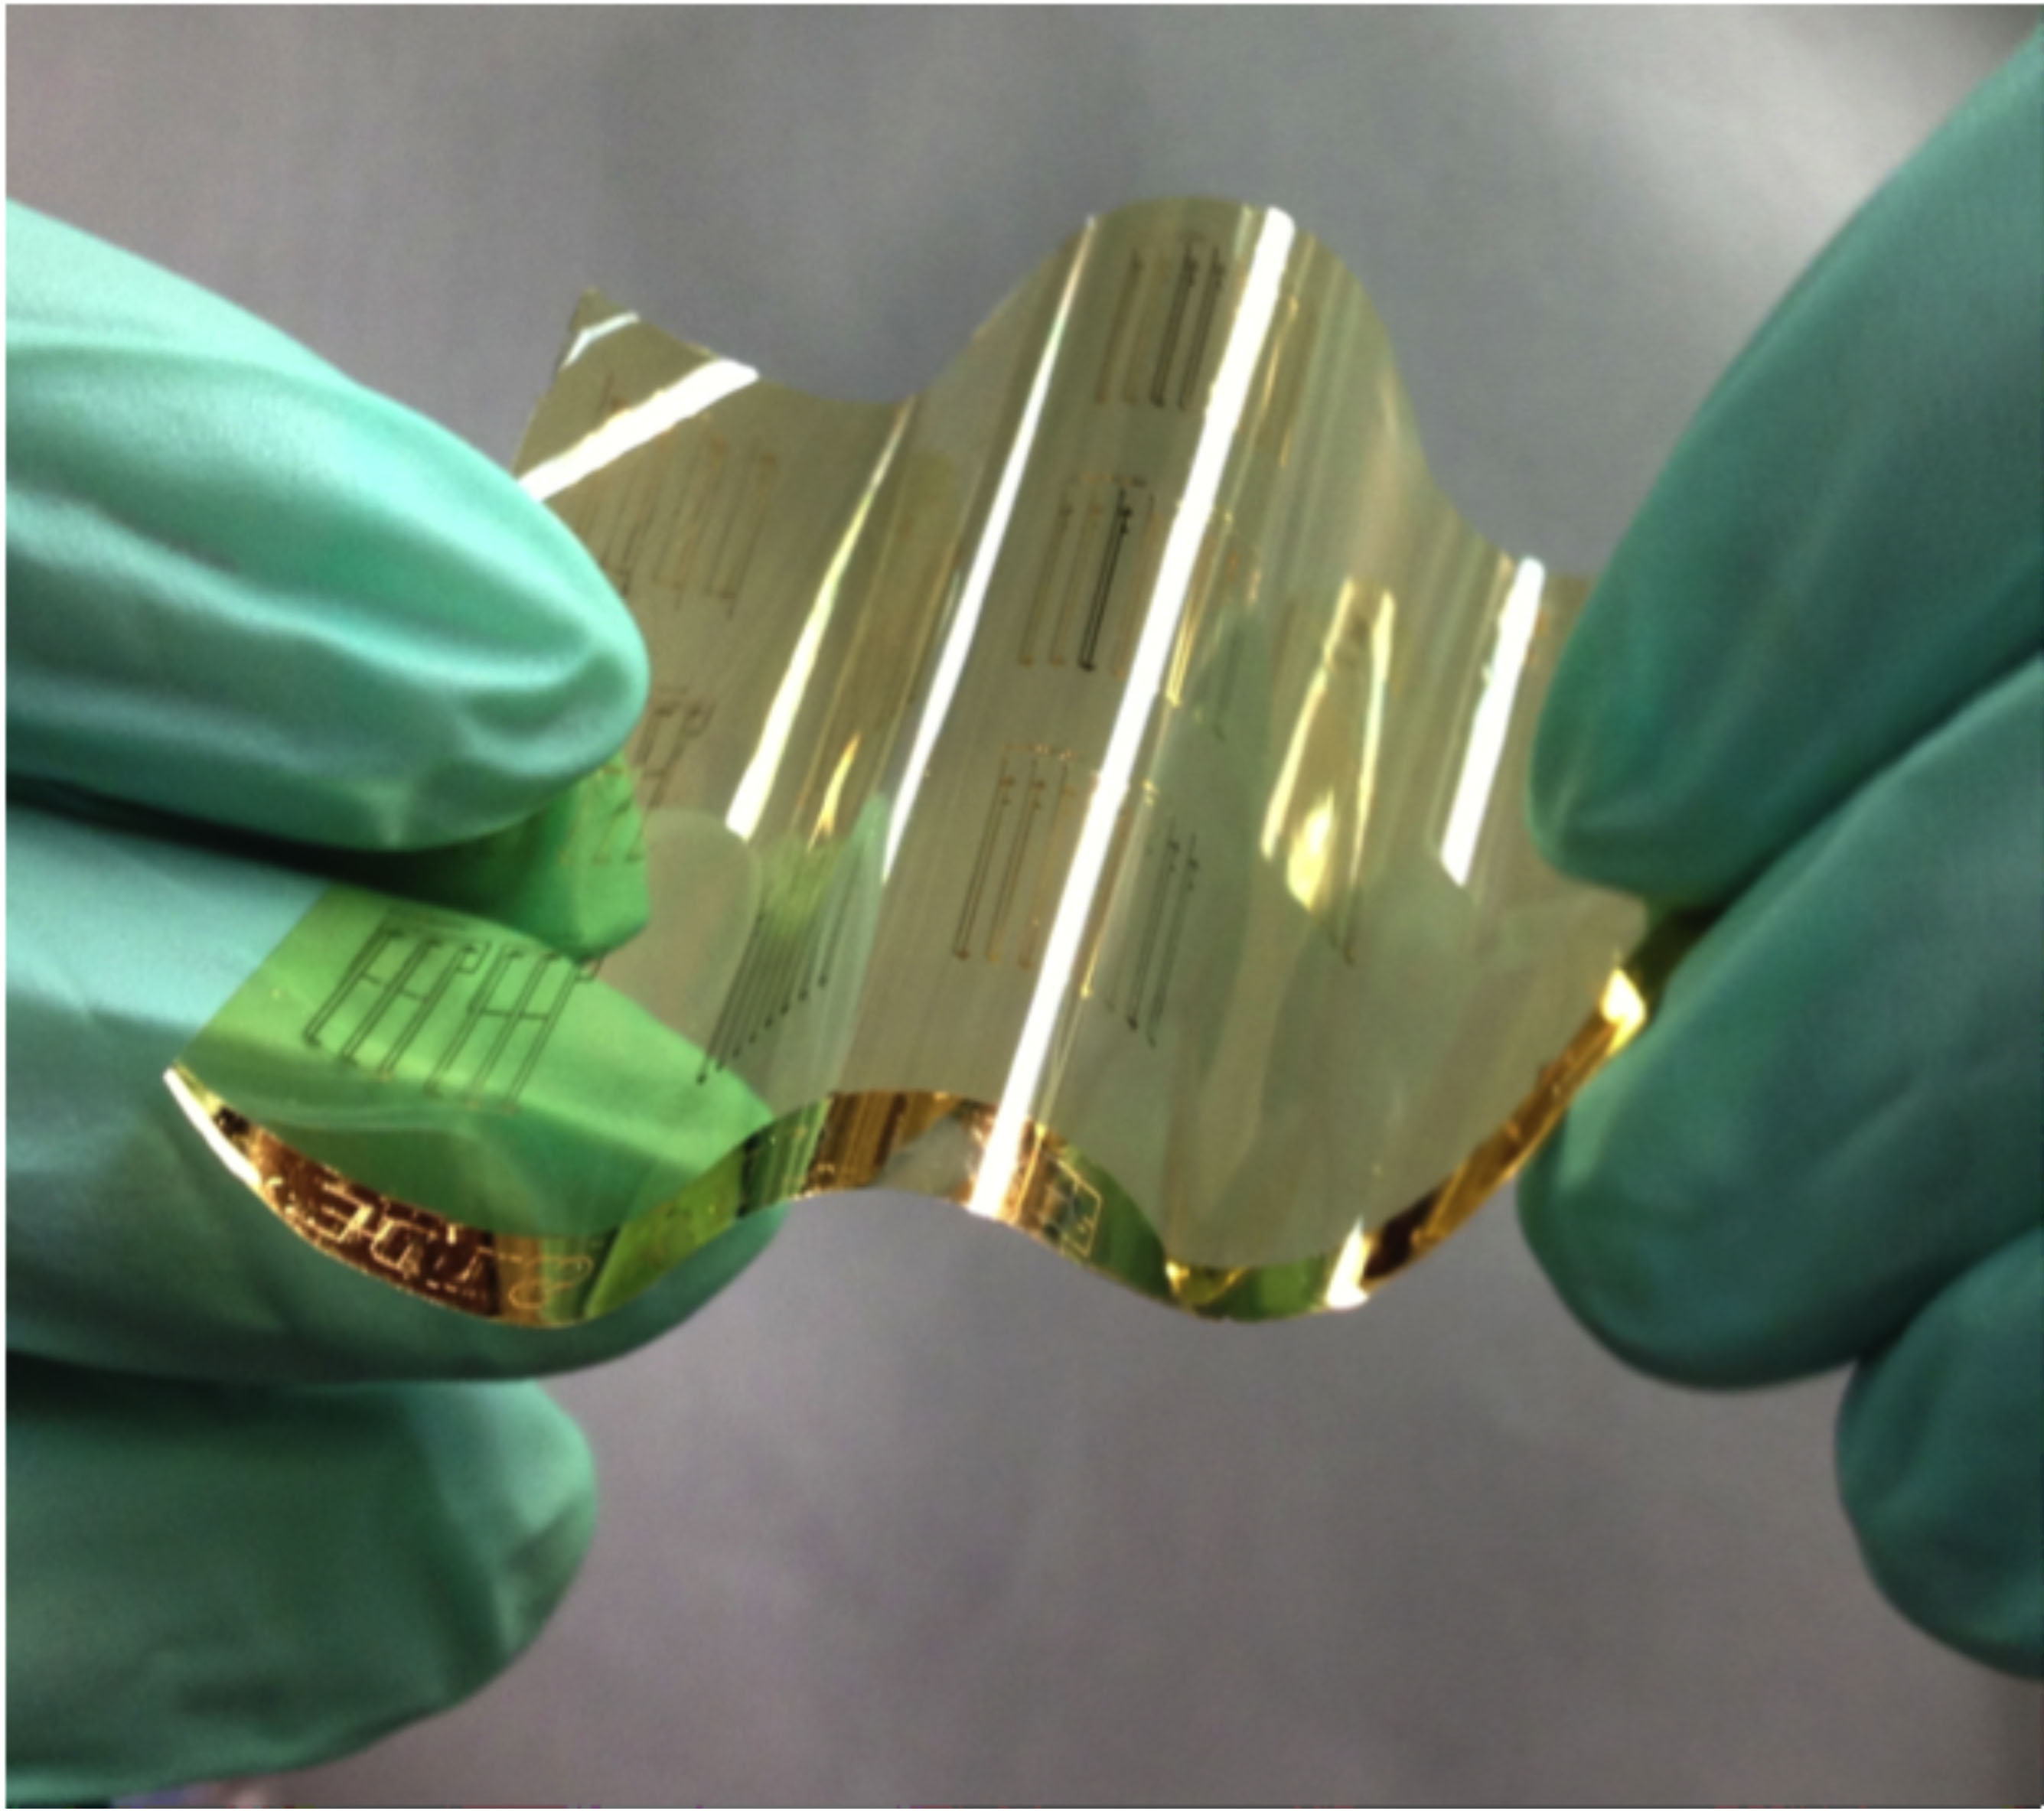 Flexible carbon nanotube circuits made more reliable, power efficient